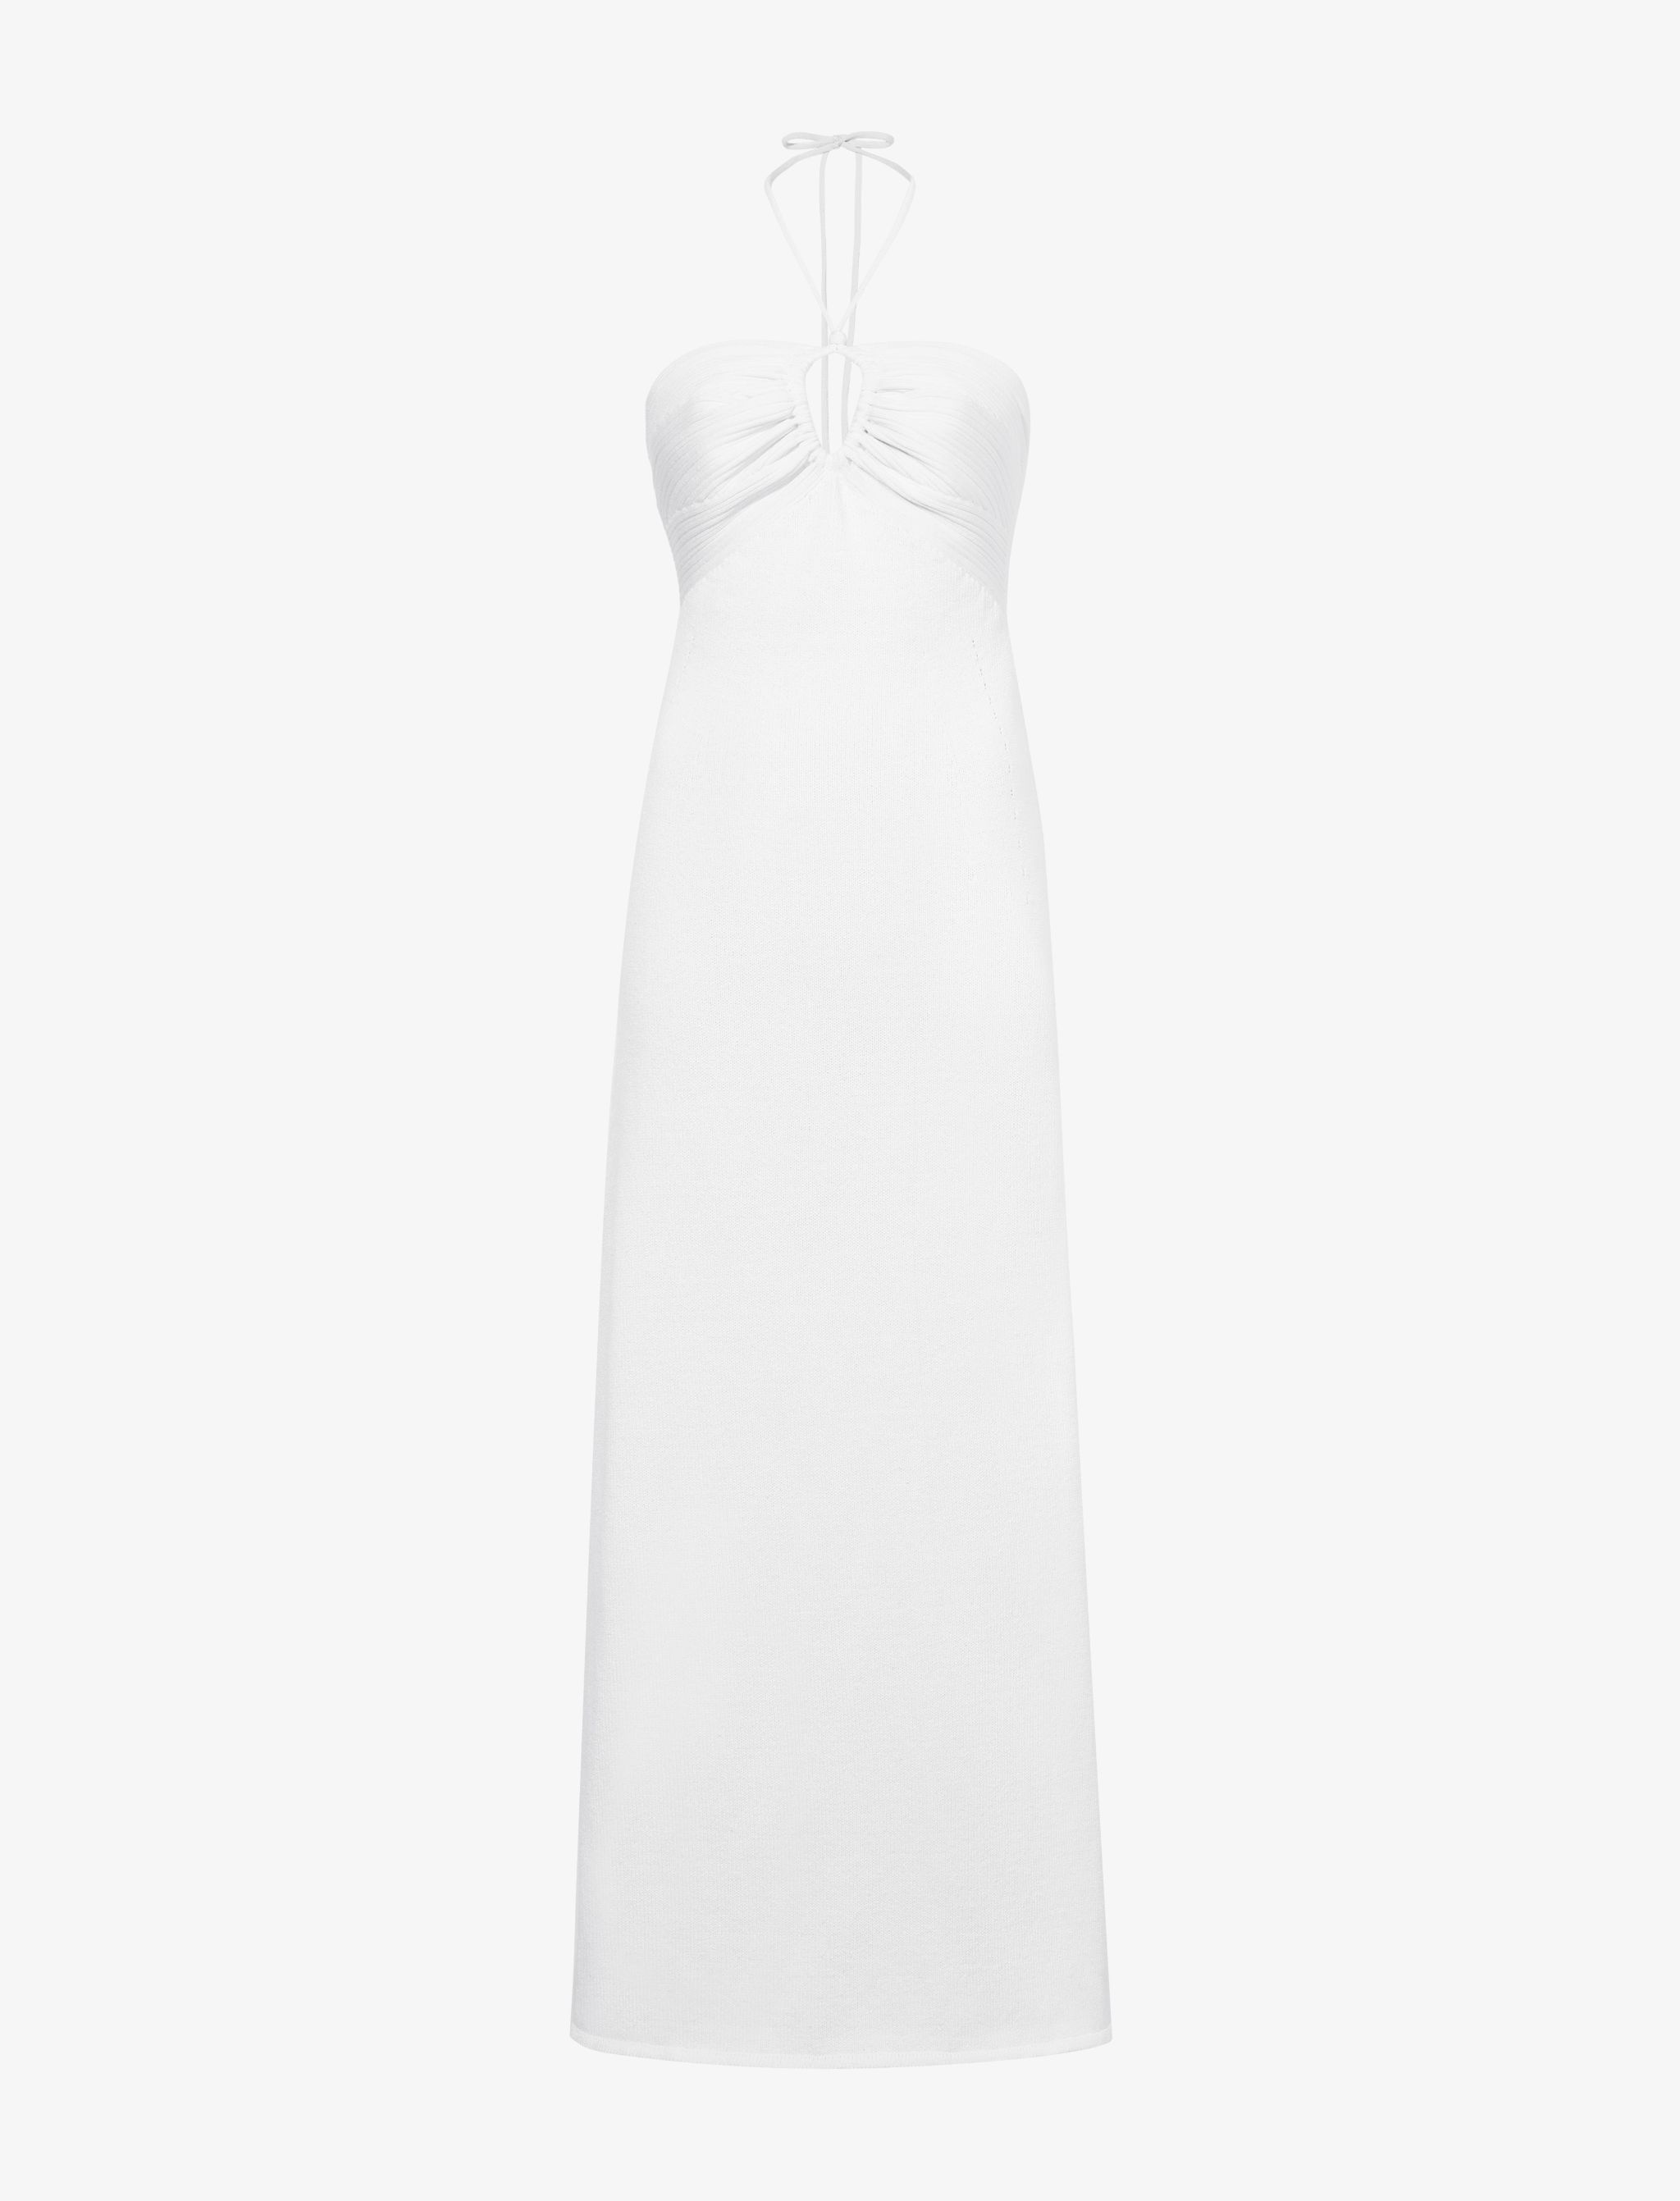 Textured Knit Halter Dress - 1